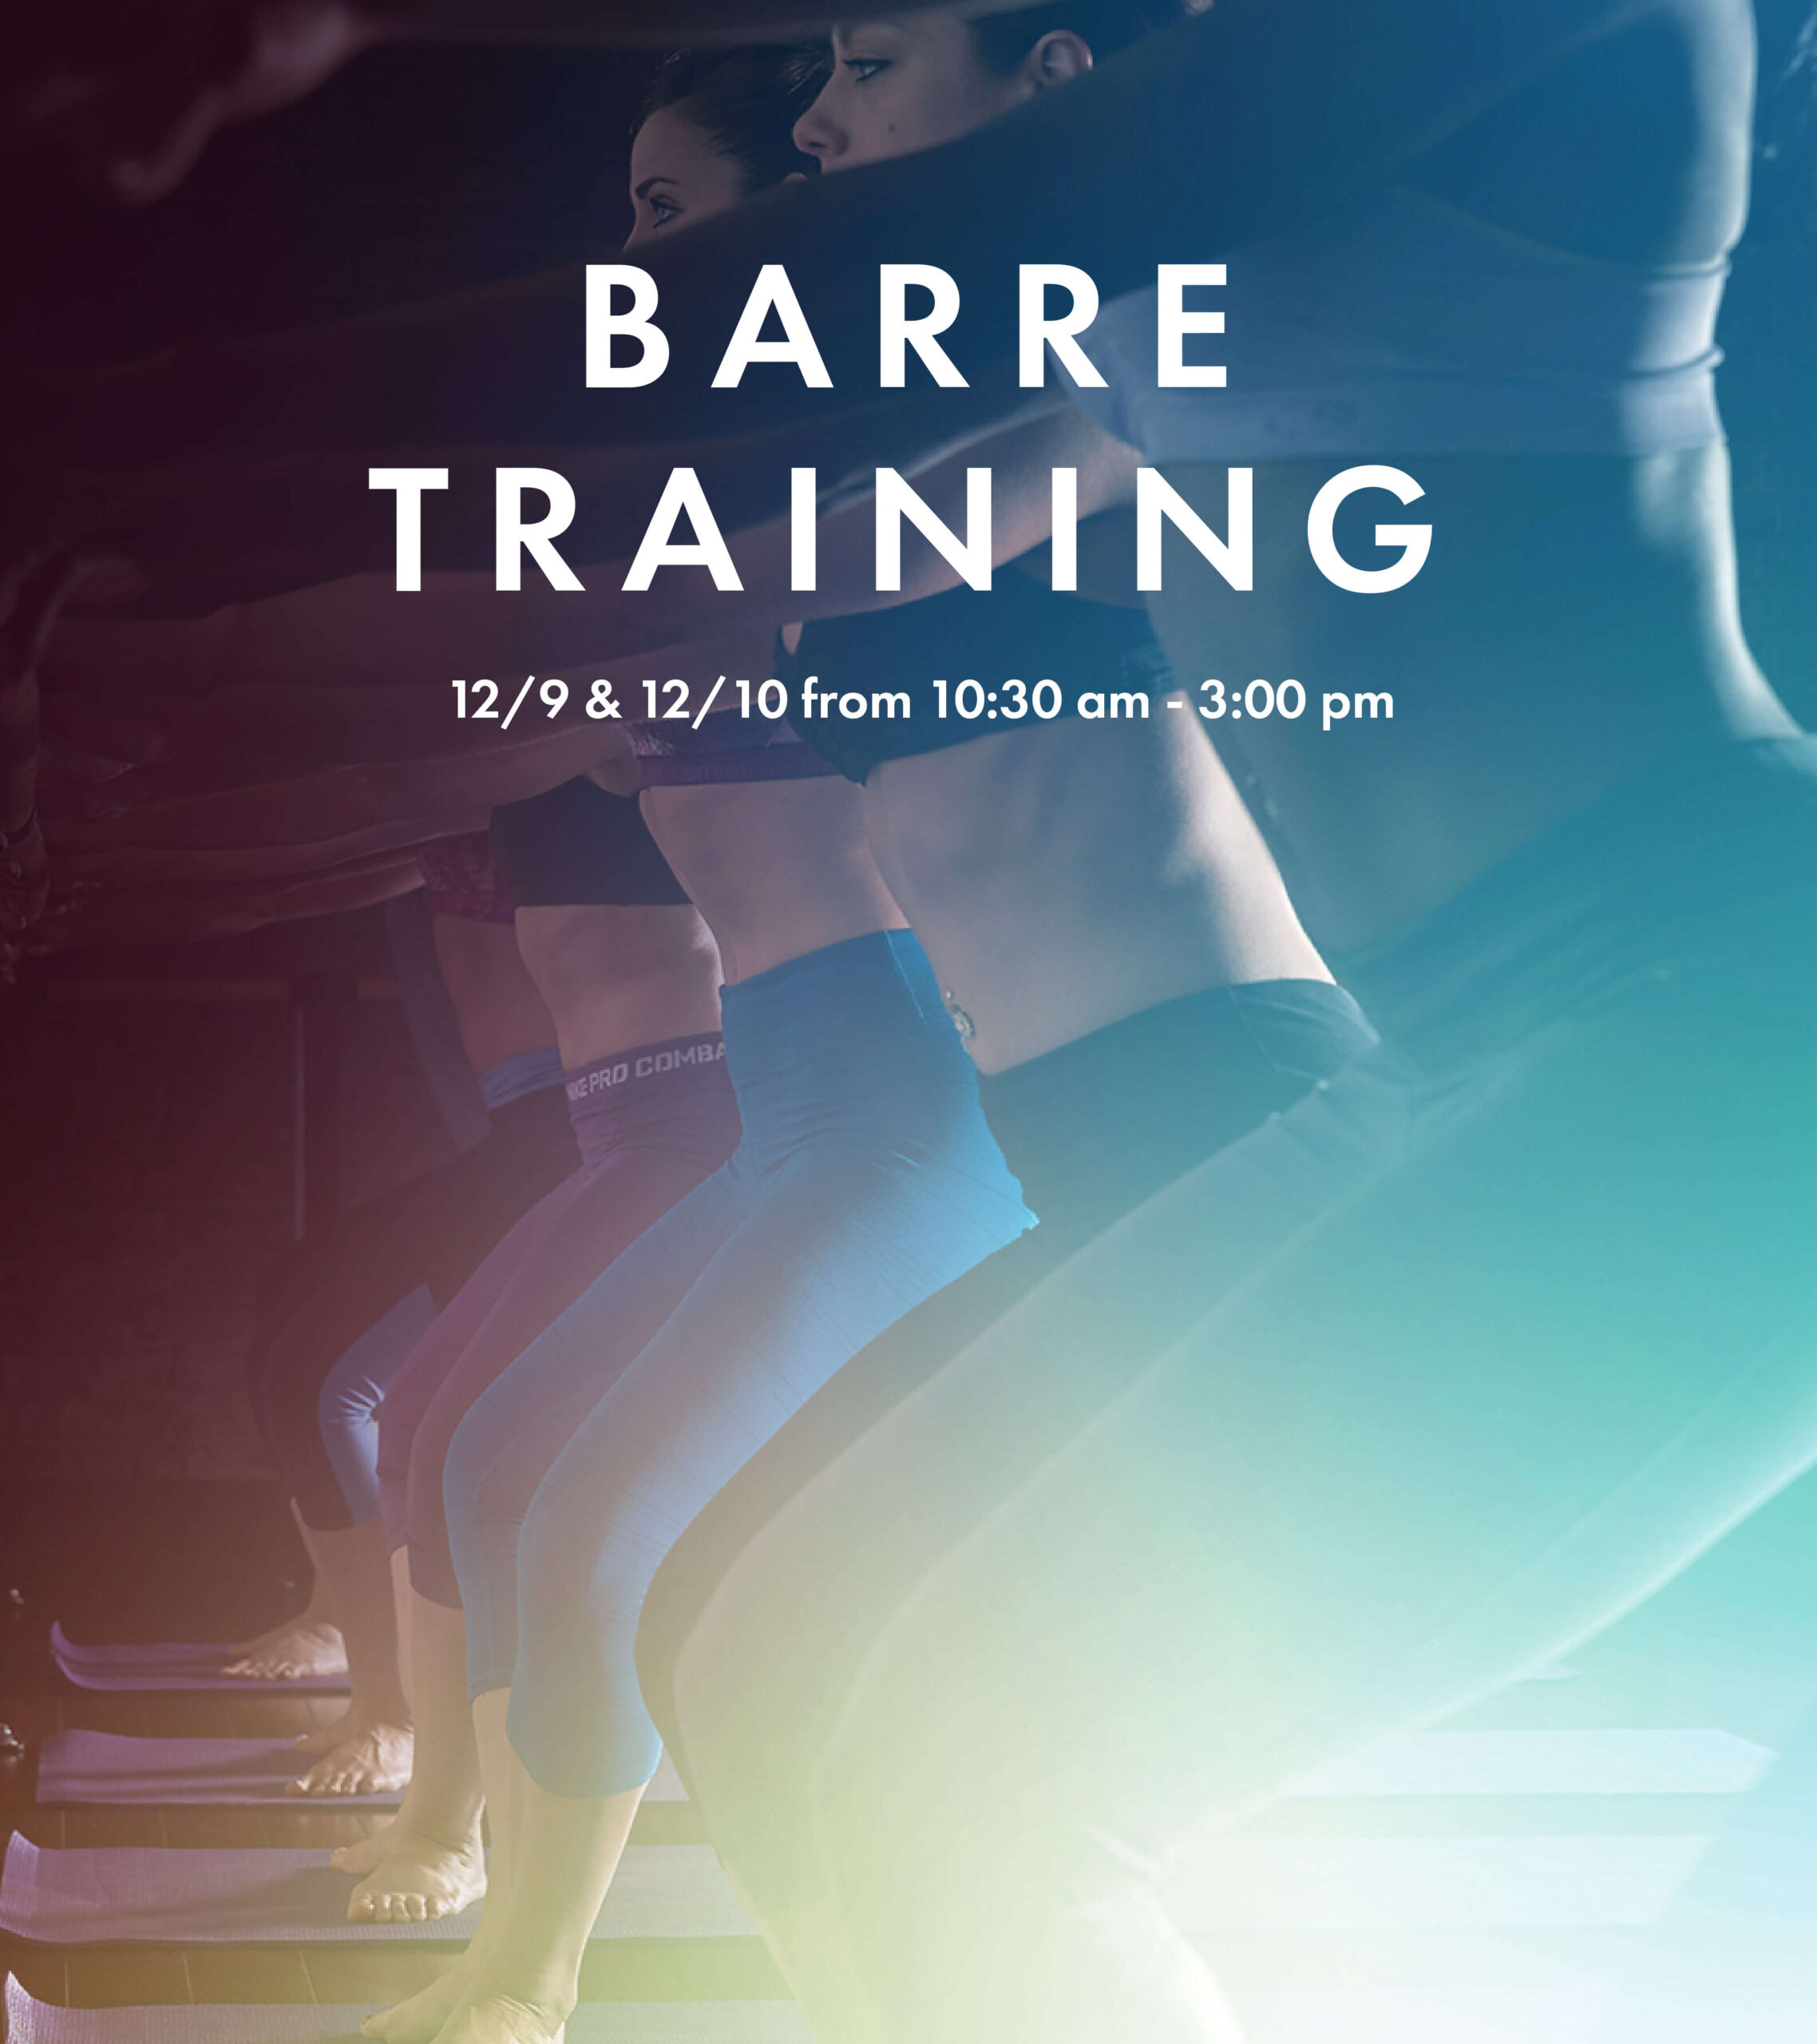 Barre training